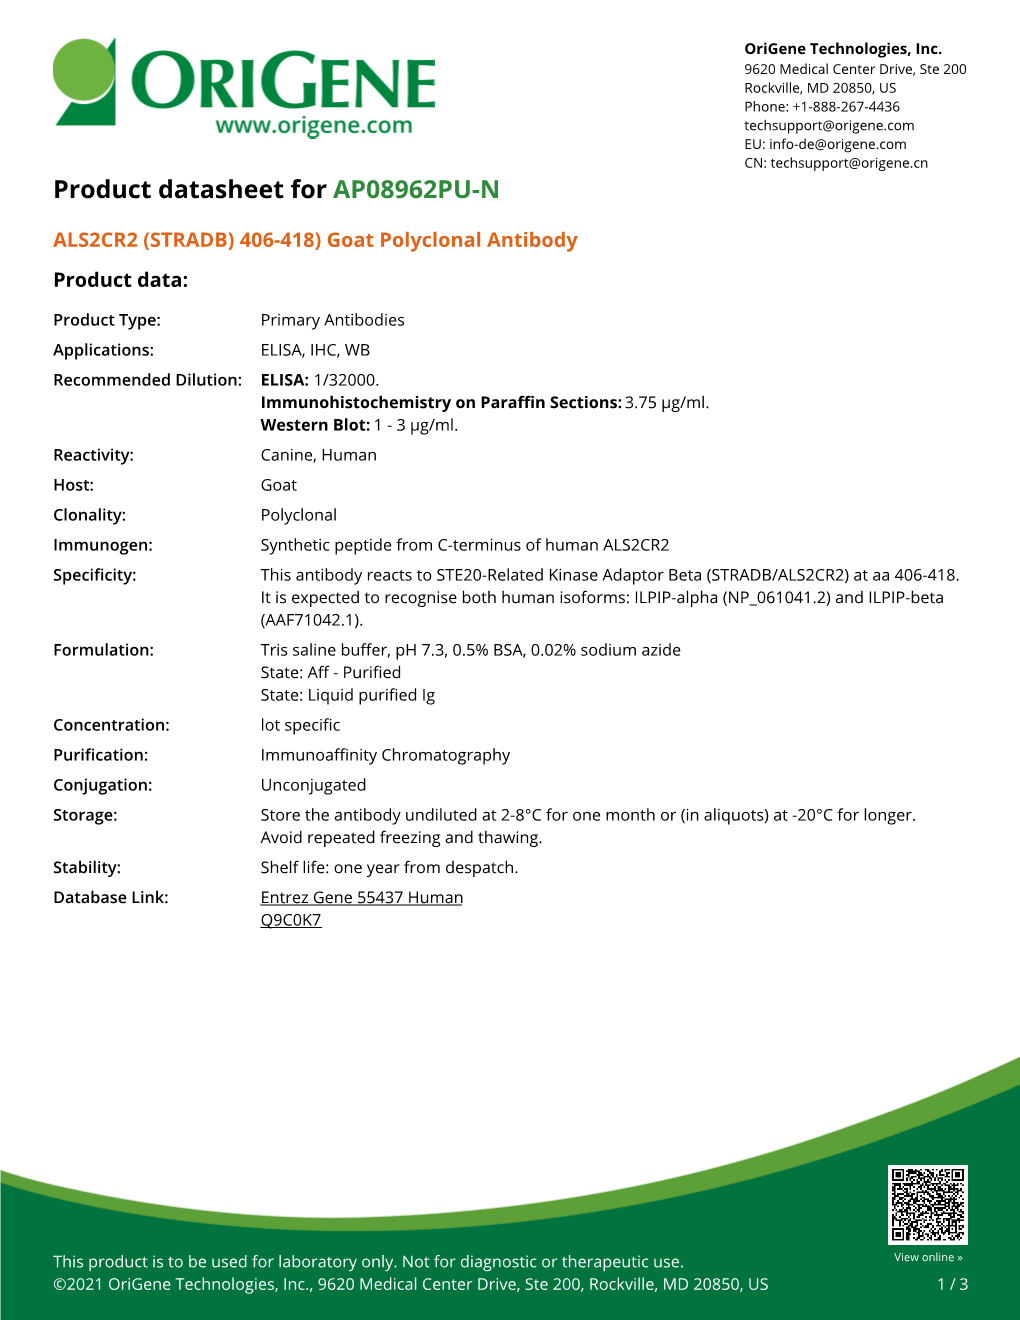 ALS2CR2 (STRADB) 406-418) Goat Polyclonal Antibody – AP08962PU-N